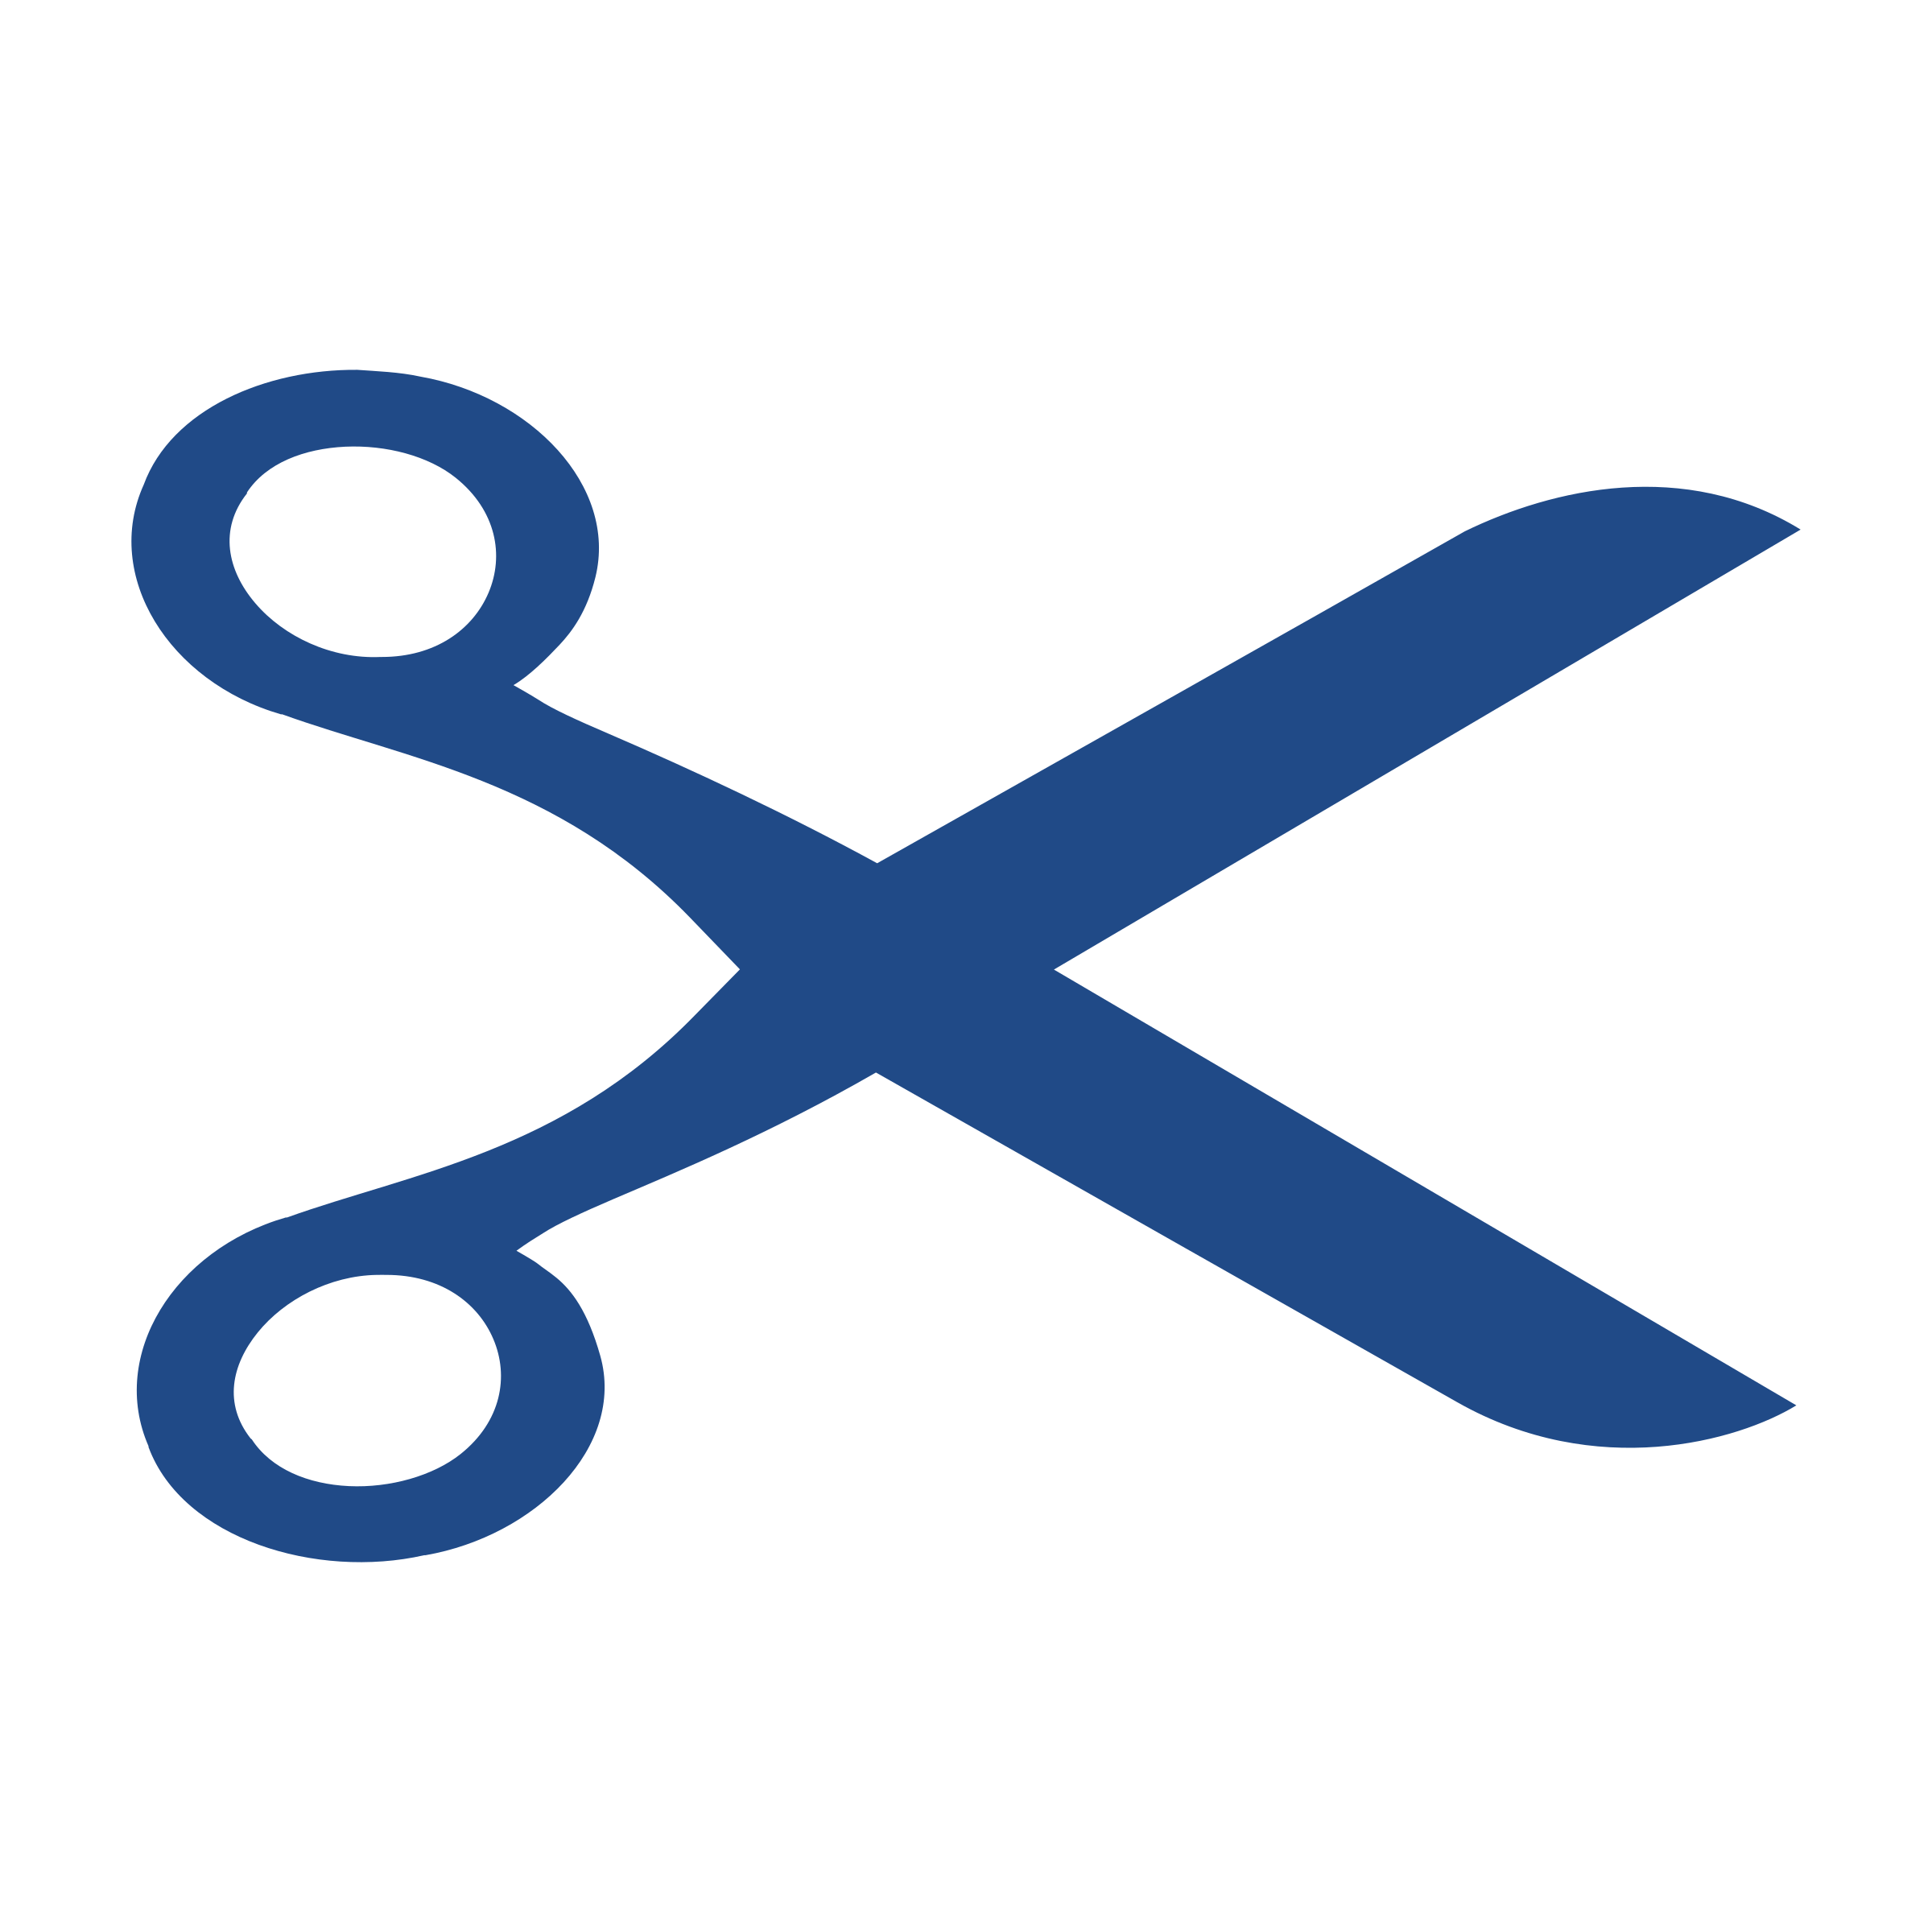 Clipart scissors logo in blue